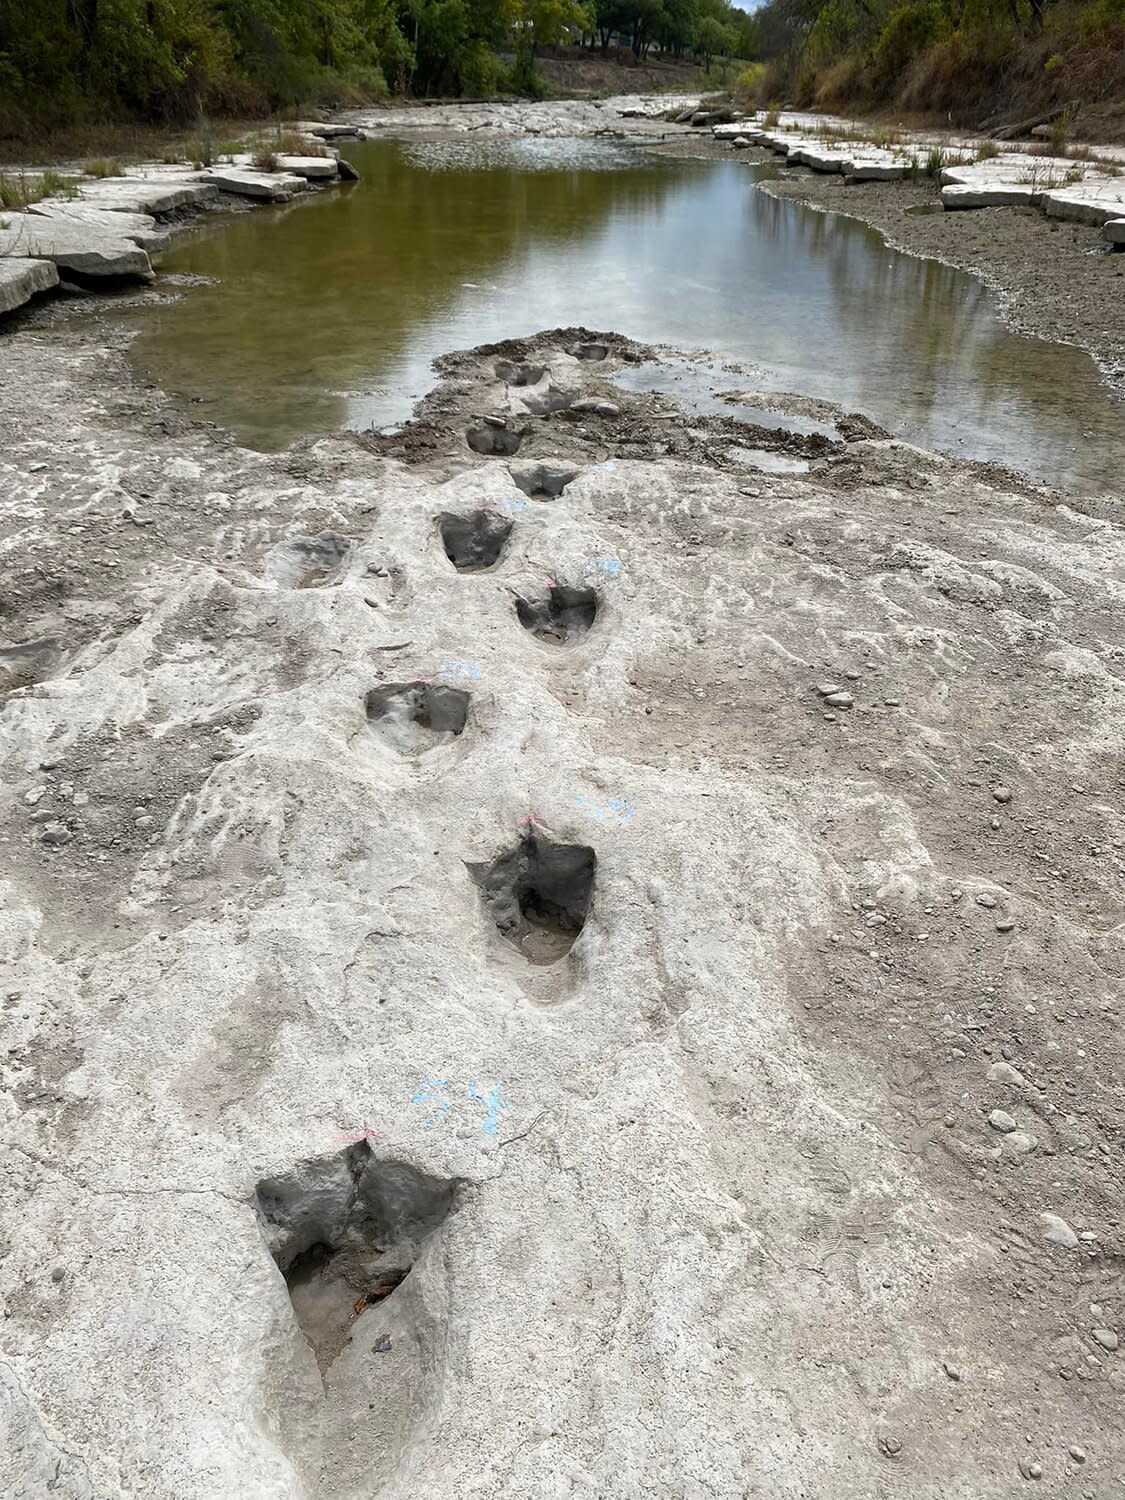 Dinosaur footprints in Texas's dried river